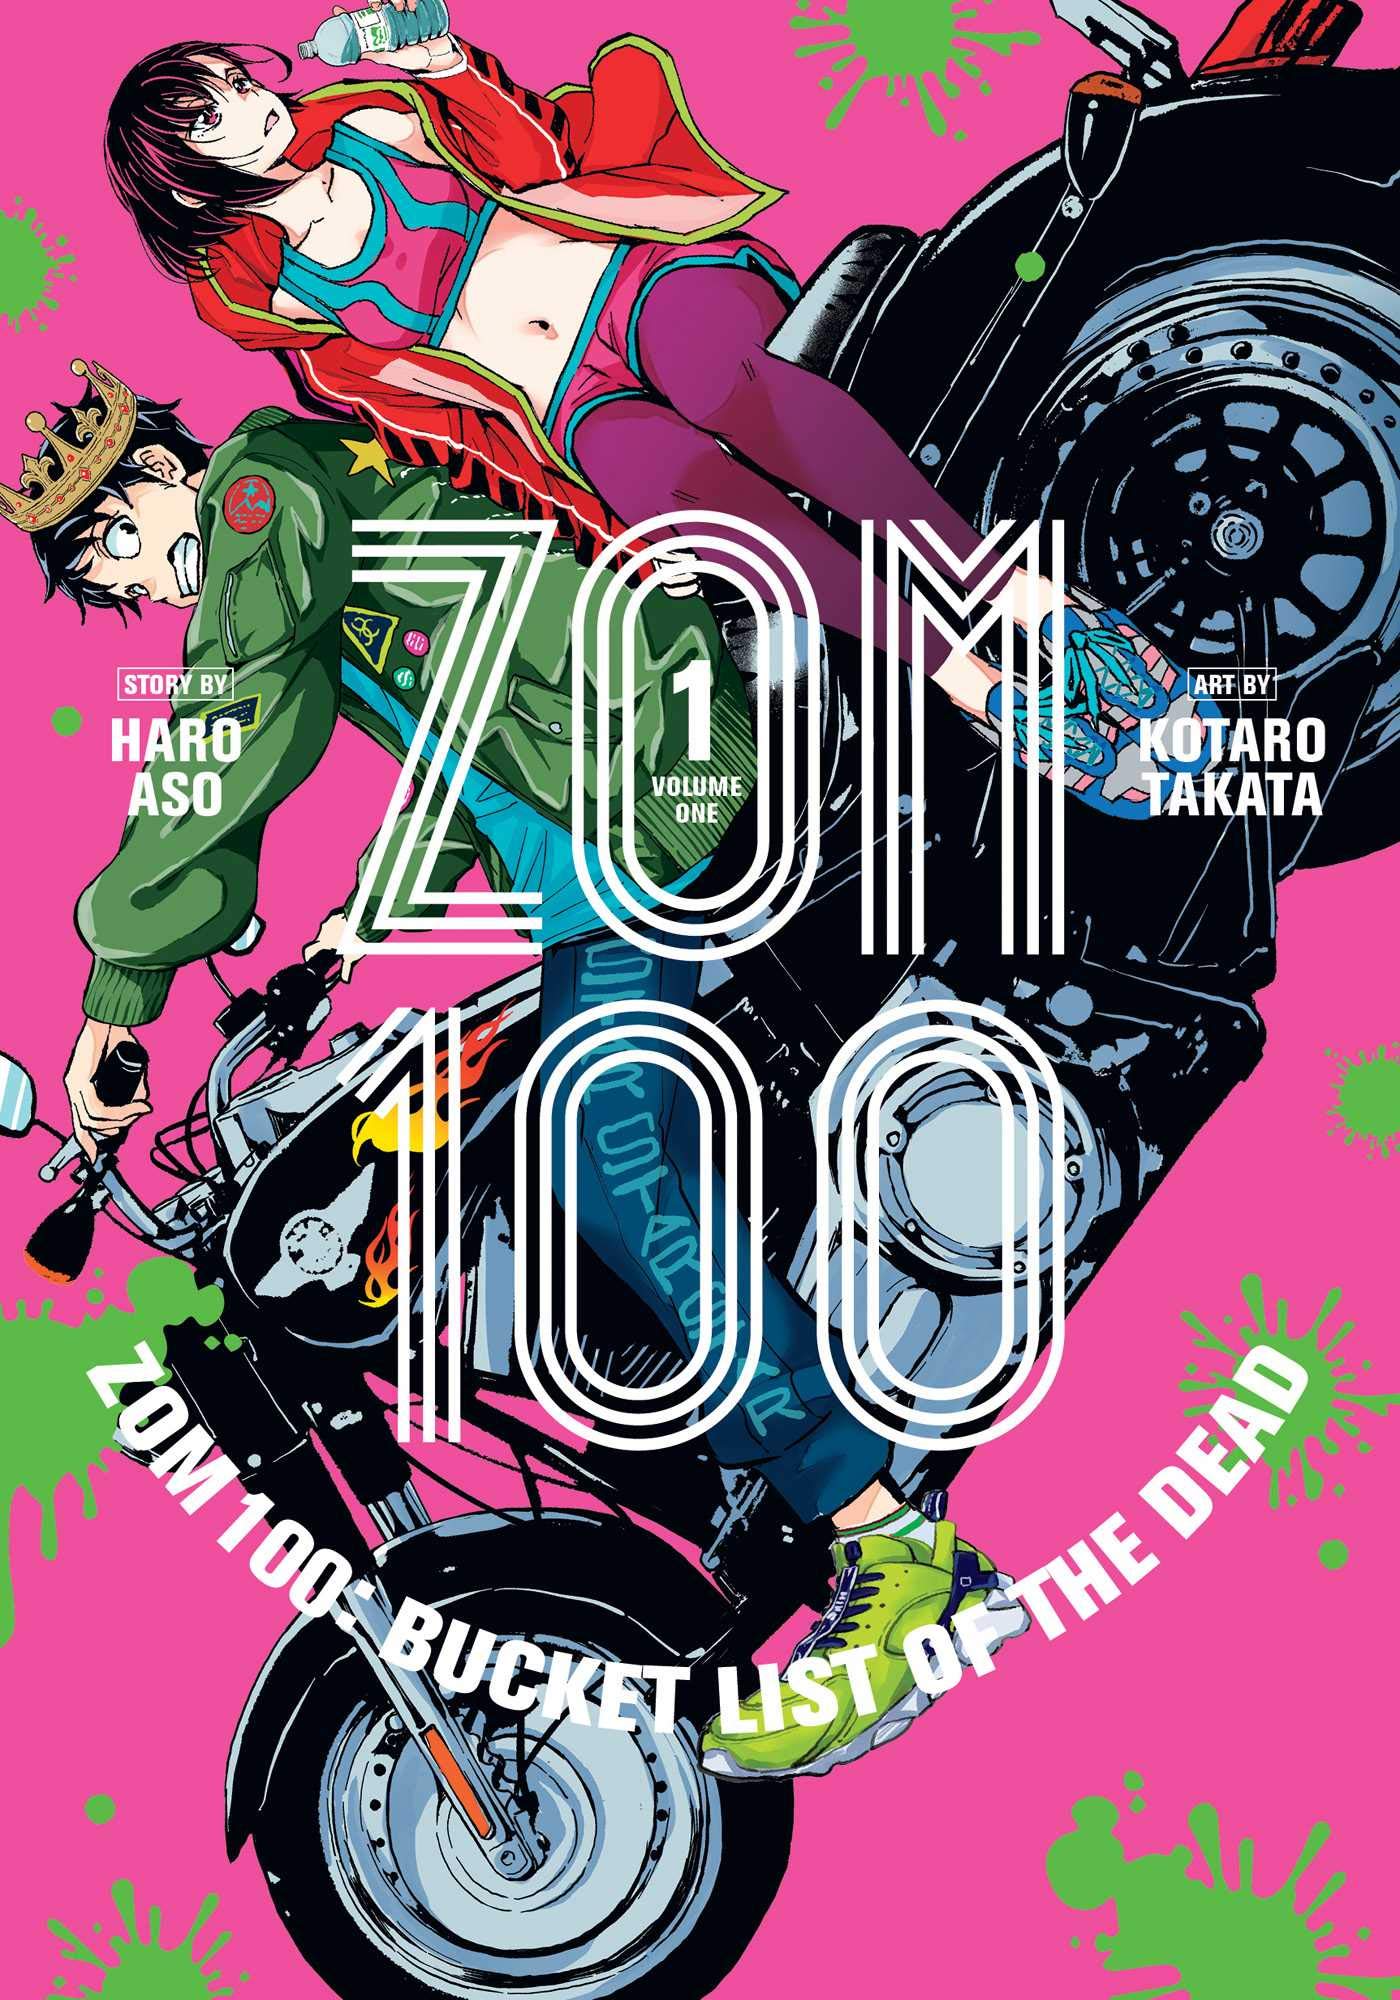 Zom 100: Bucket List of the Dead manga